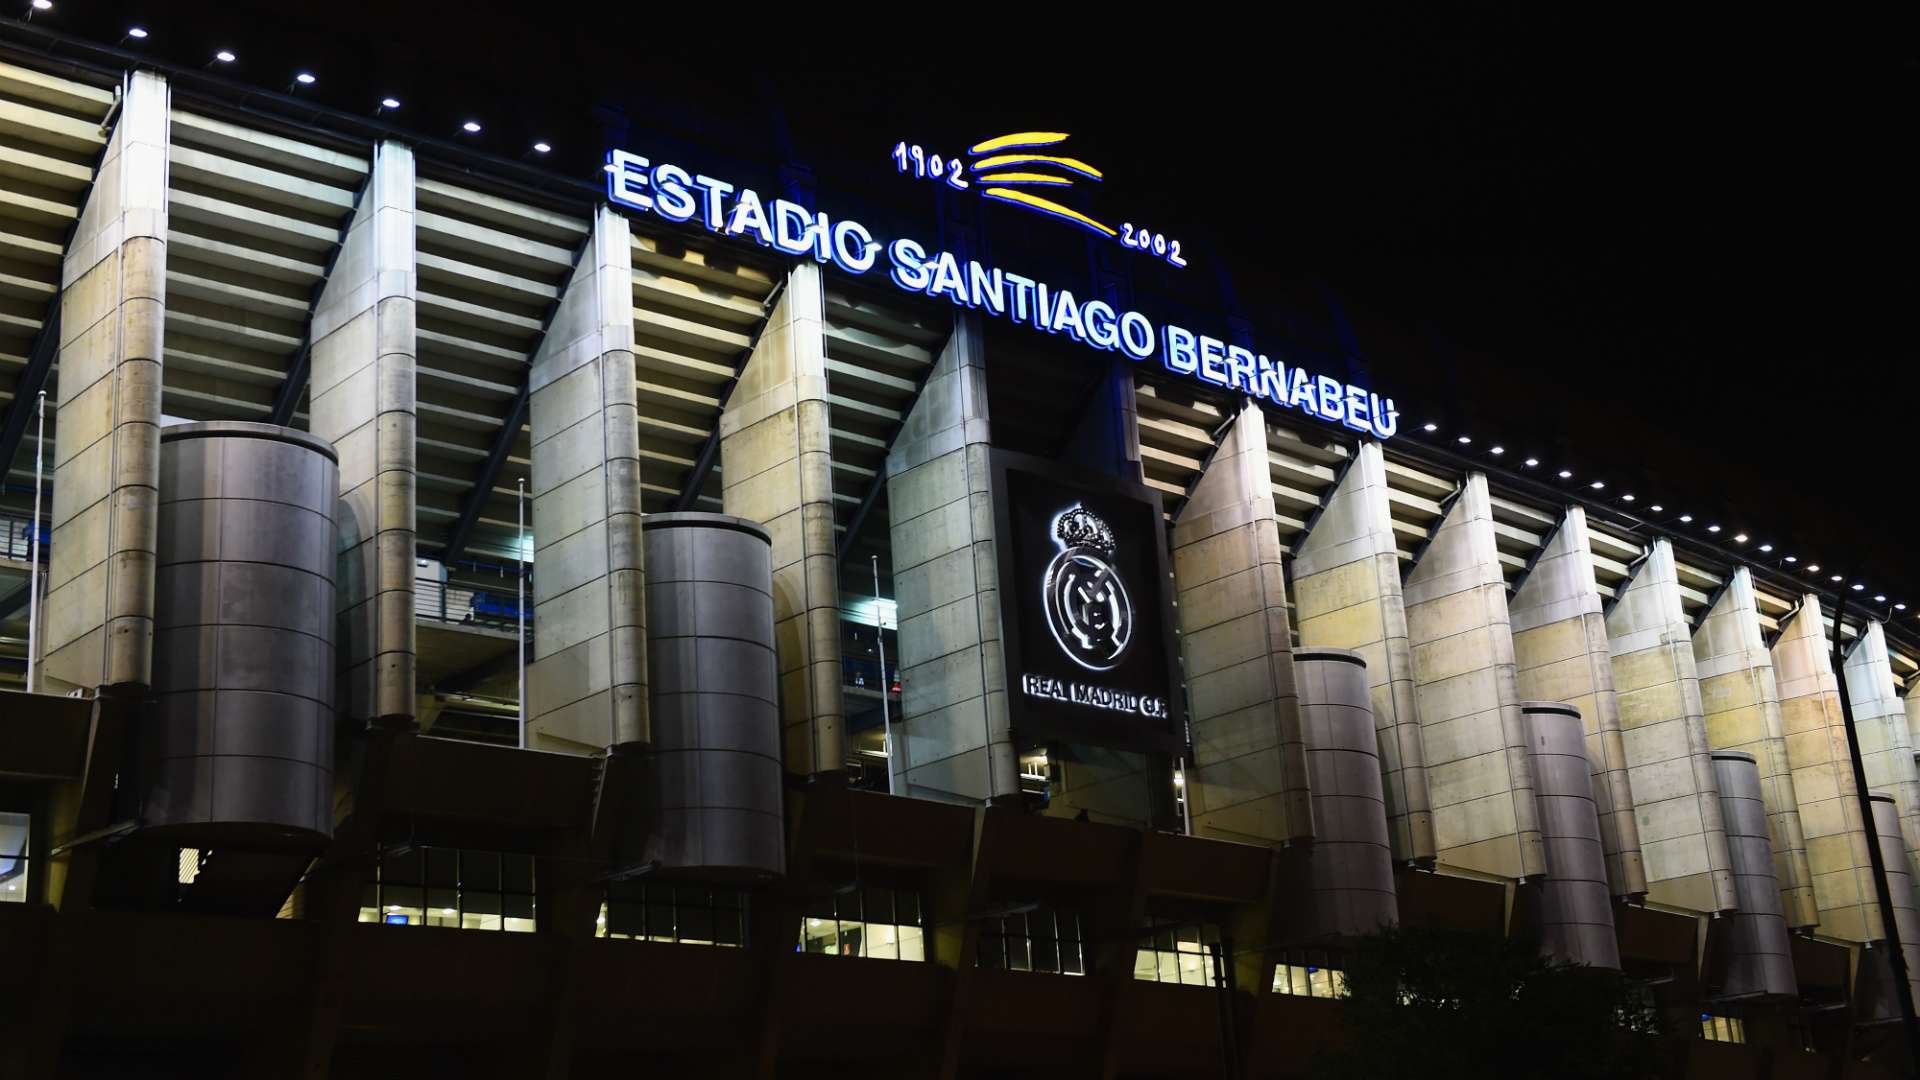 Santiago Bernabeu Stadium Real Madrid Liverpool UEFA Champions League 11042014